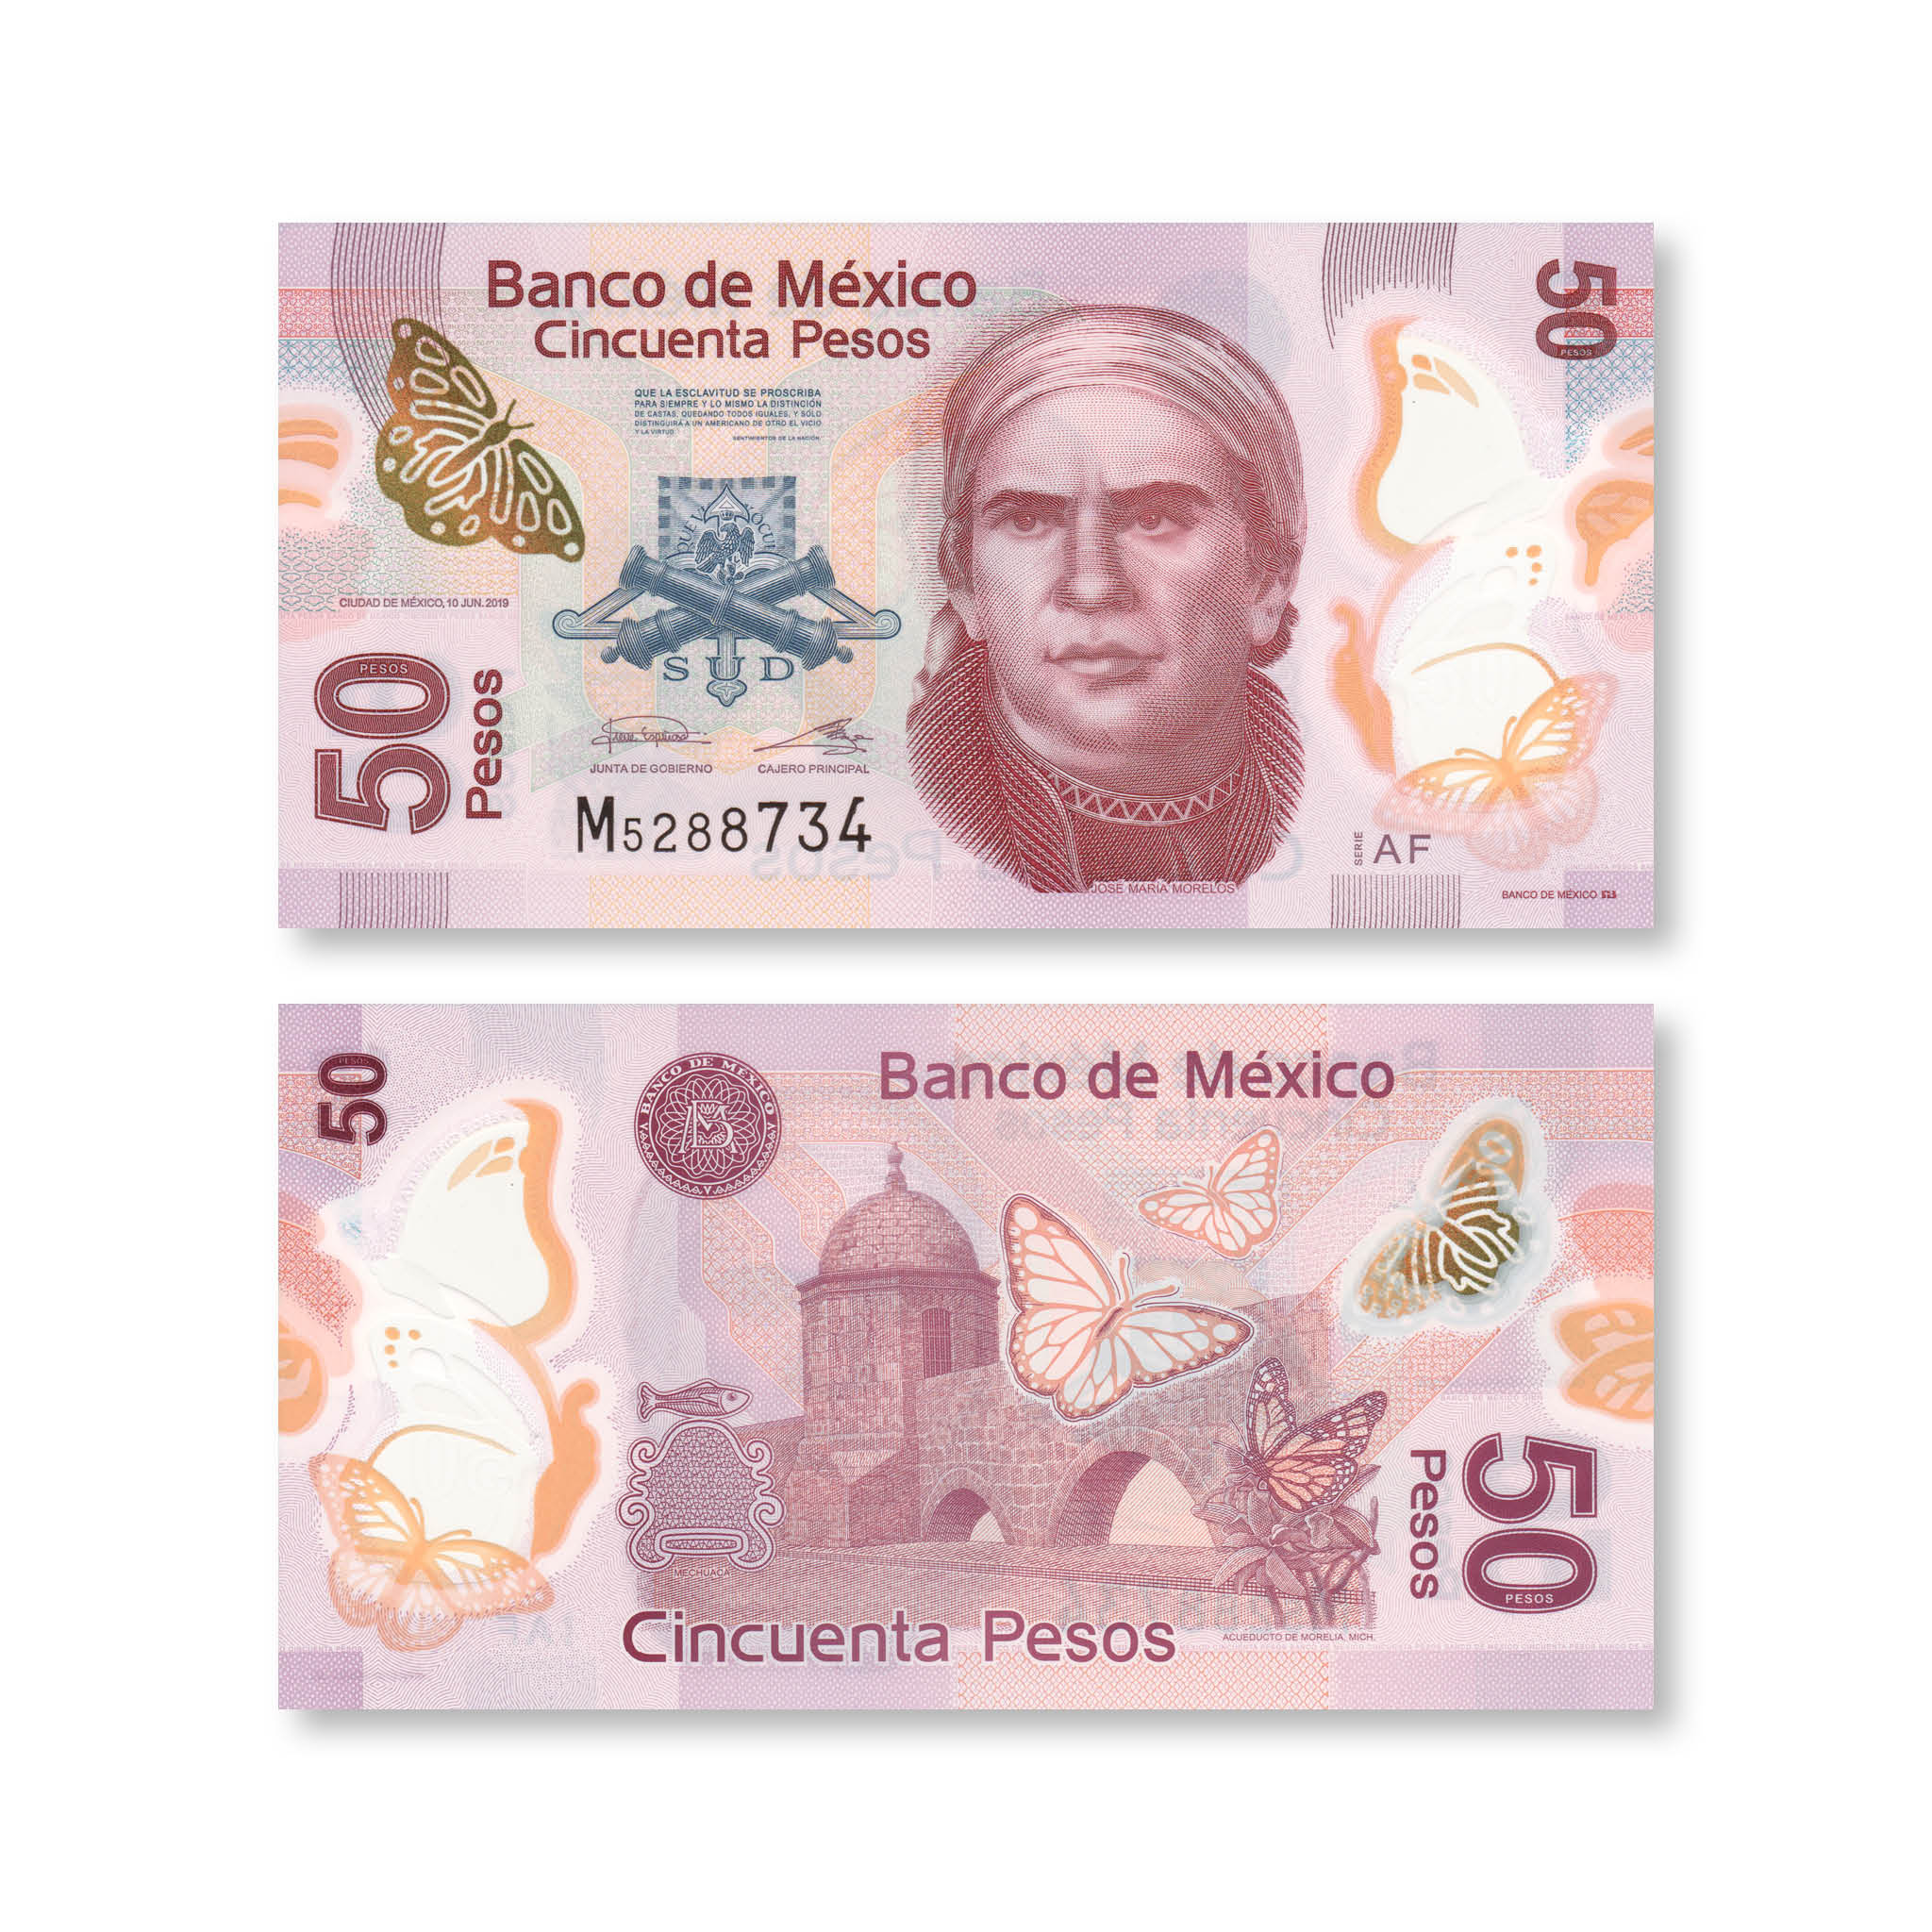 Mexico 50 Pesos, 2019, B712l, P123A, UNC - Robert's World Money - World Banknotes